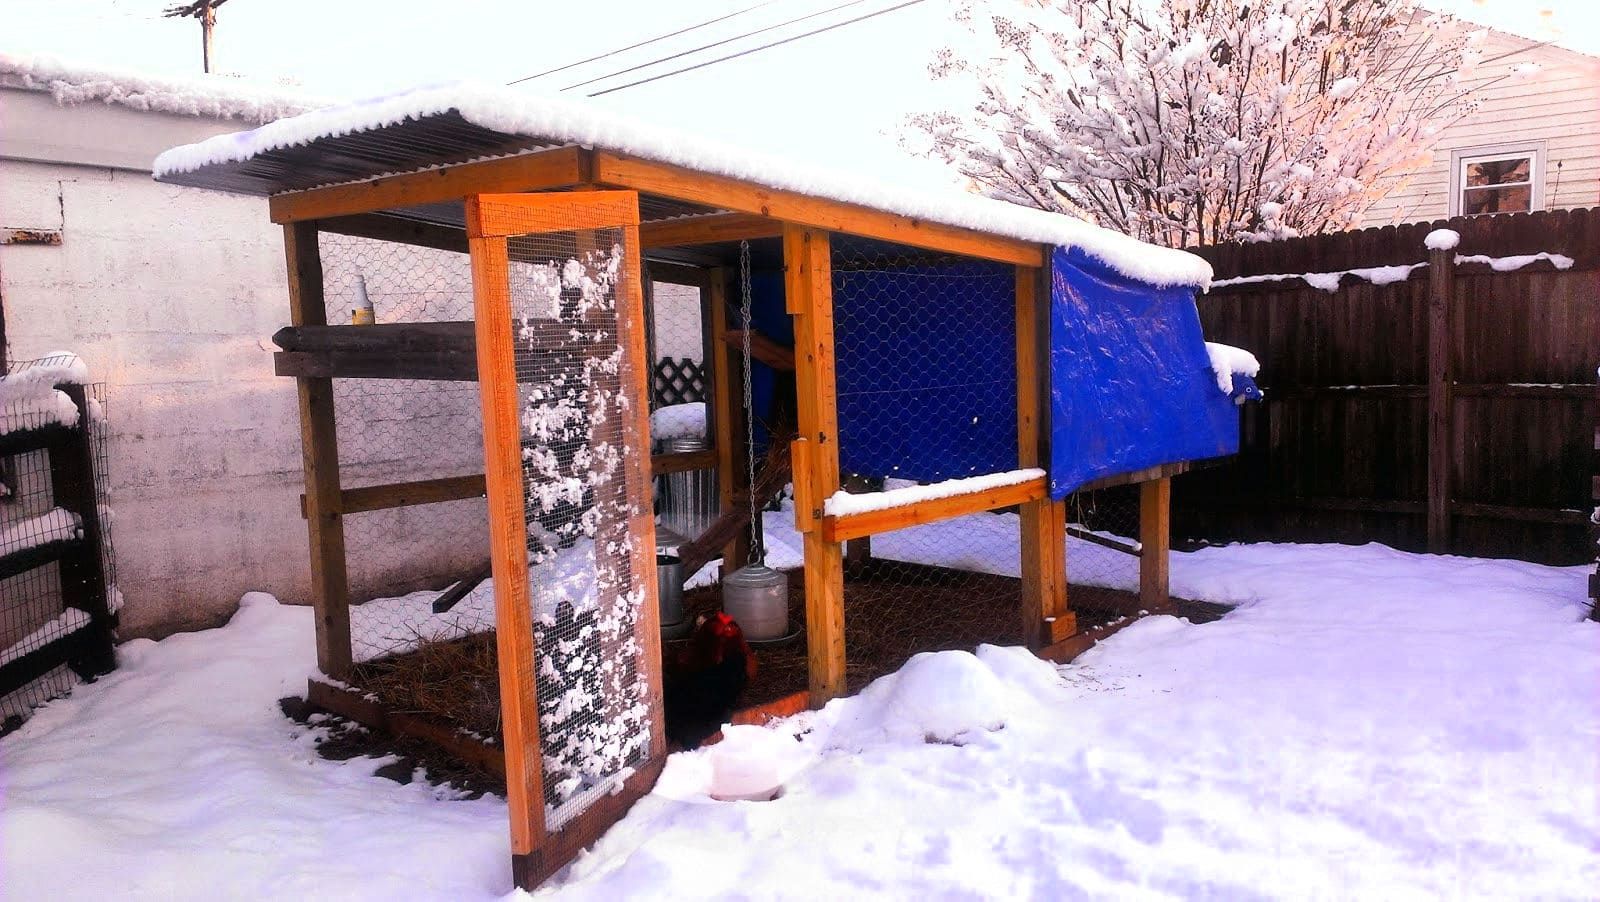 Chicken coop at the backyard in winter snow season